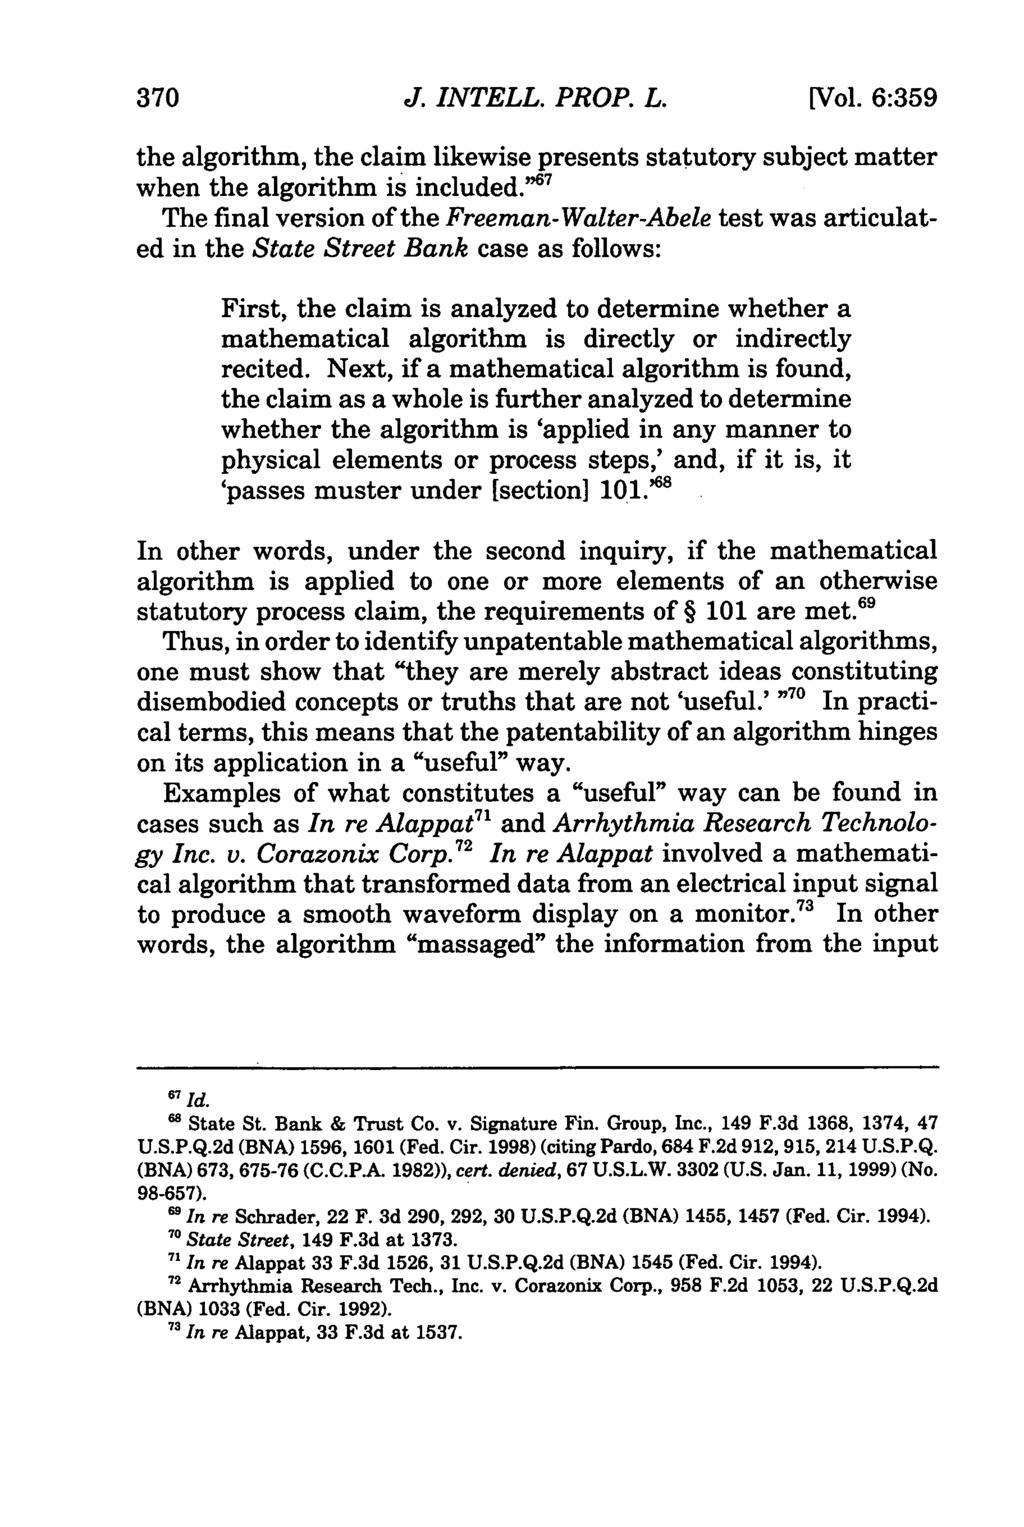 370 Journal of Intellectual Property Law, Vol. 6, Iss. 2 [1999], Art. 6 J. INTELL. PROP. L. [Vol.